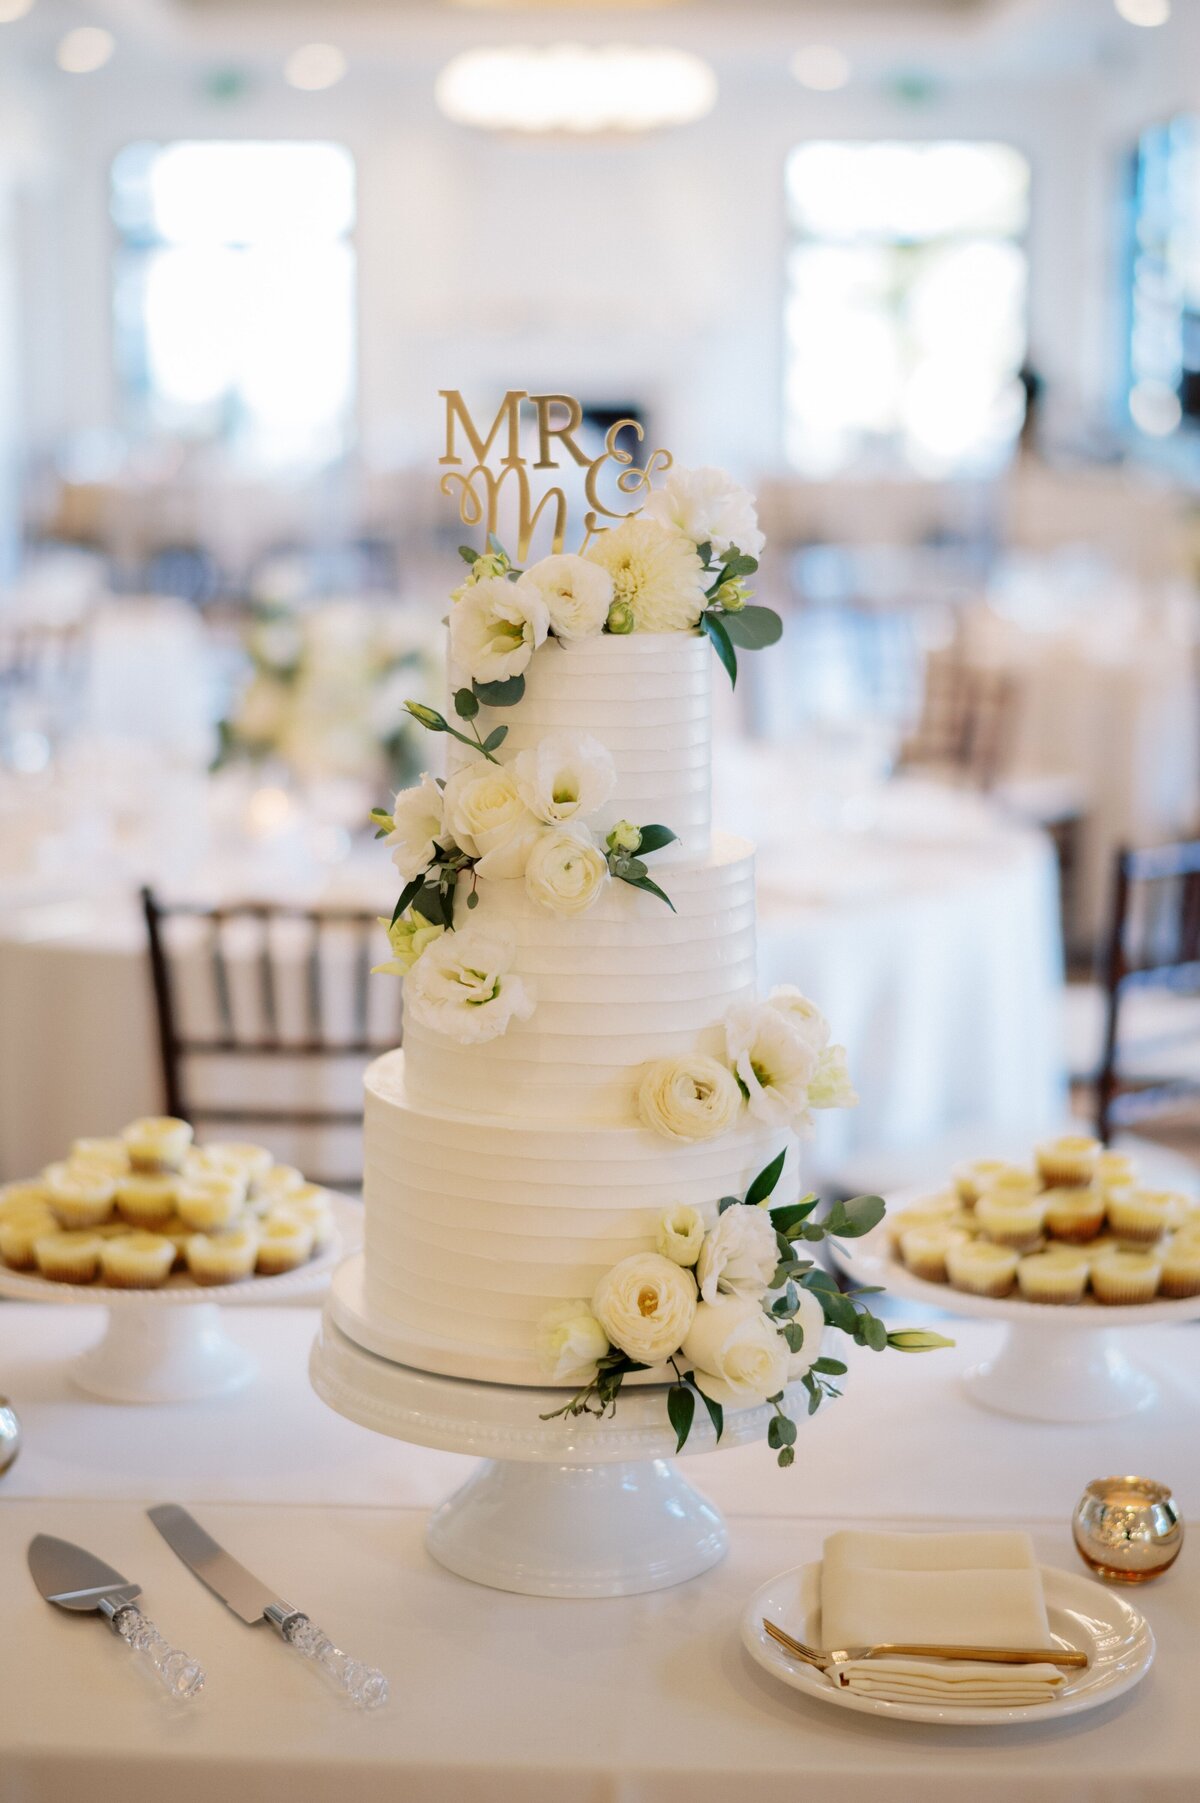 A white wedding cake with white flowers adding elegance.